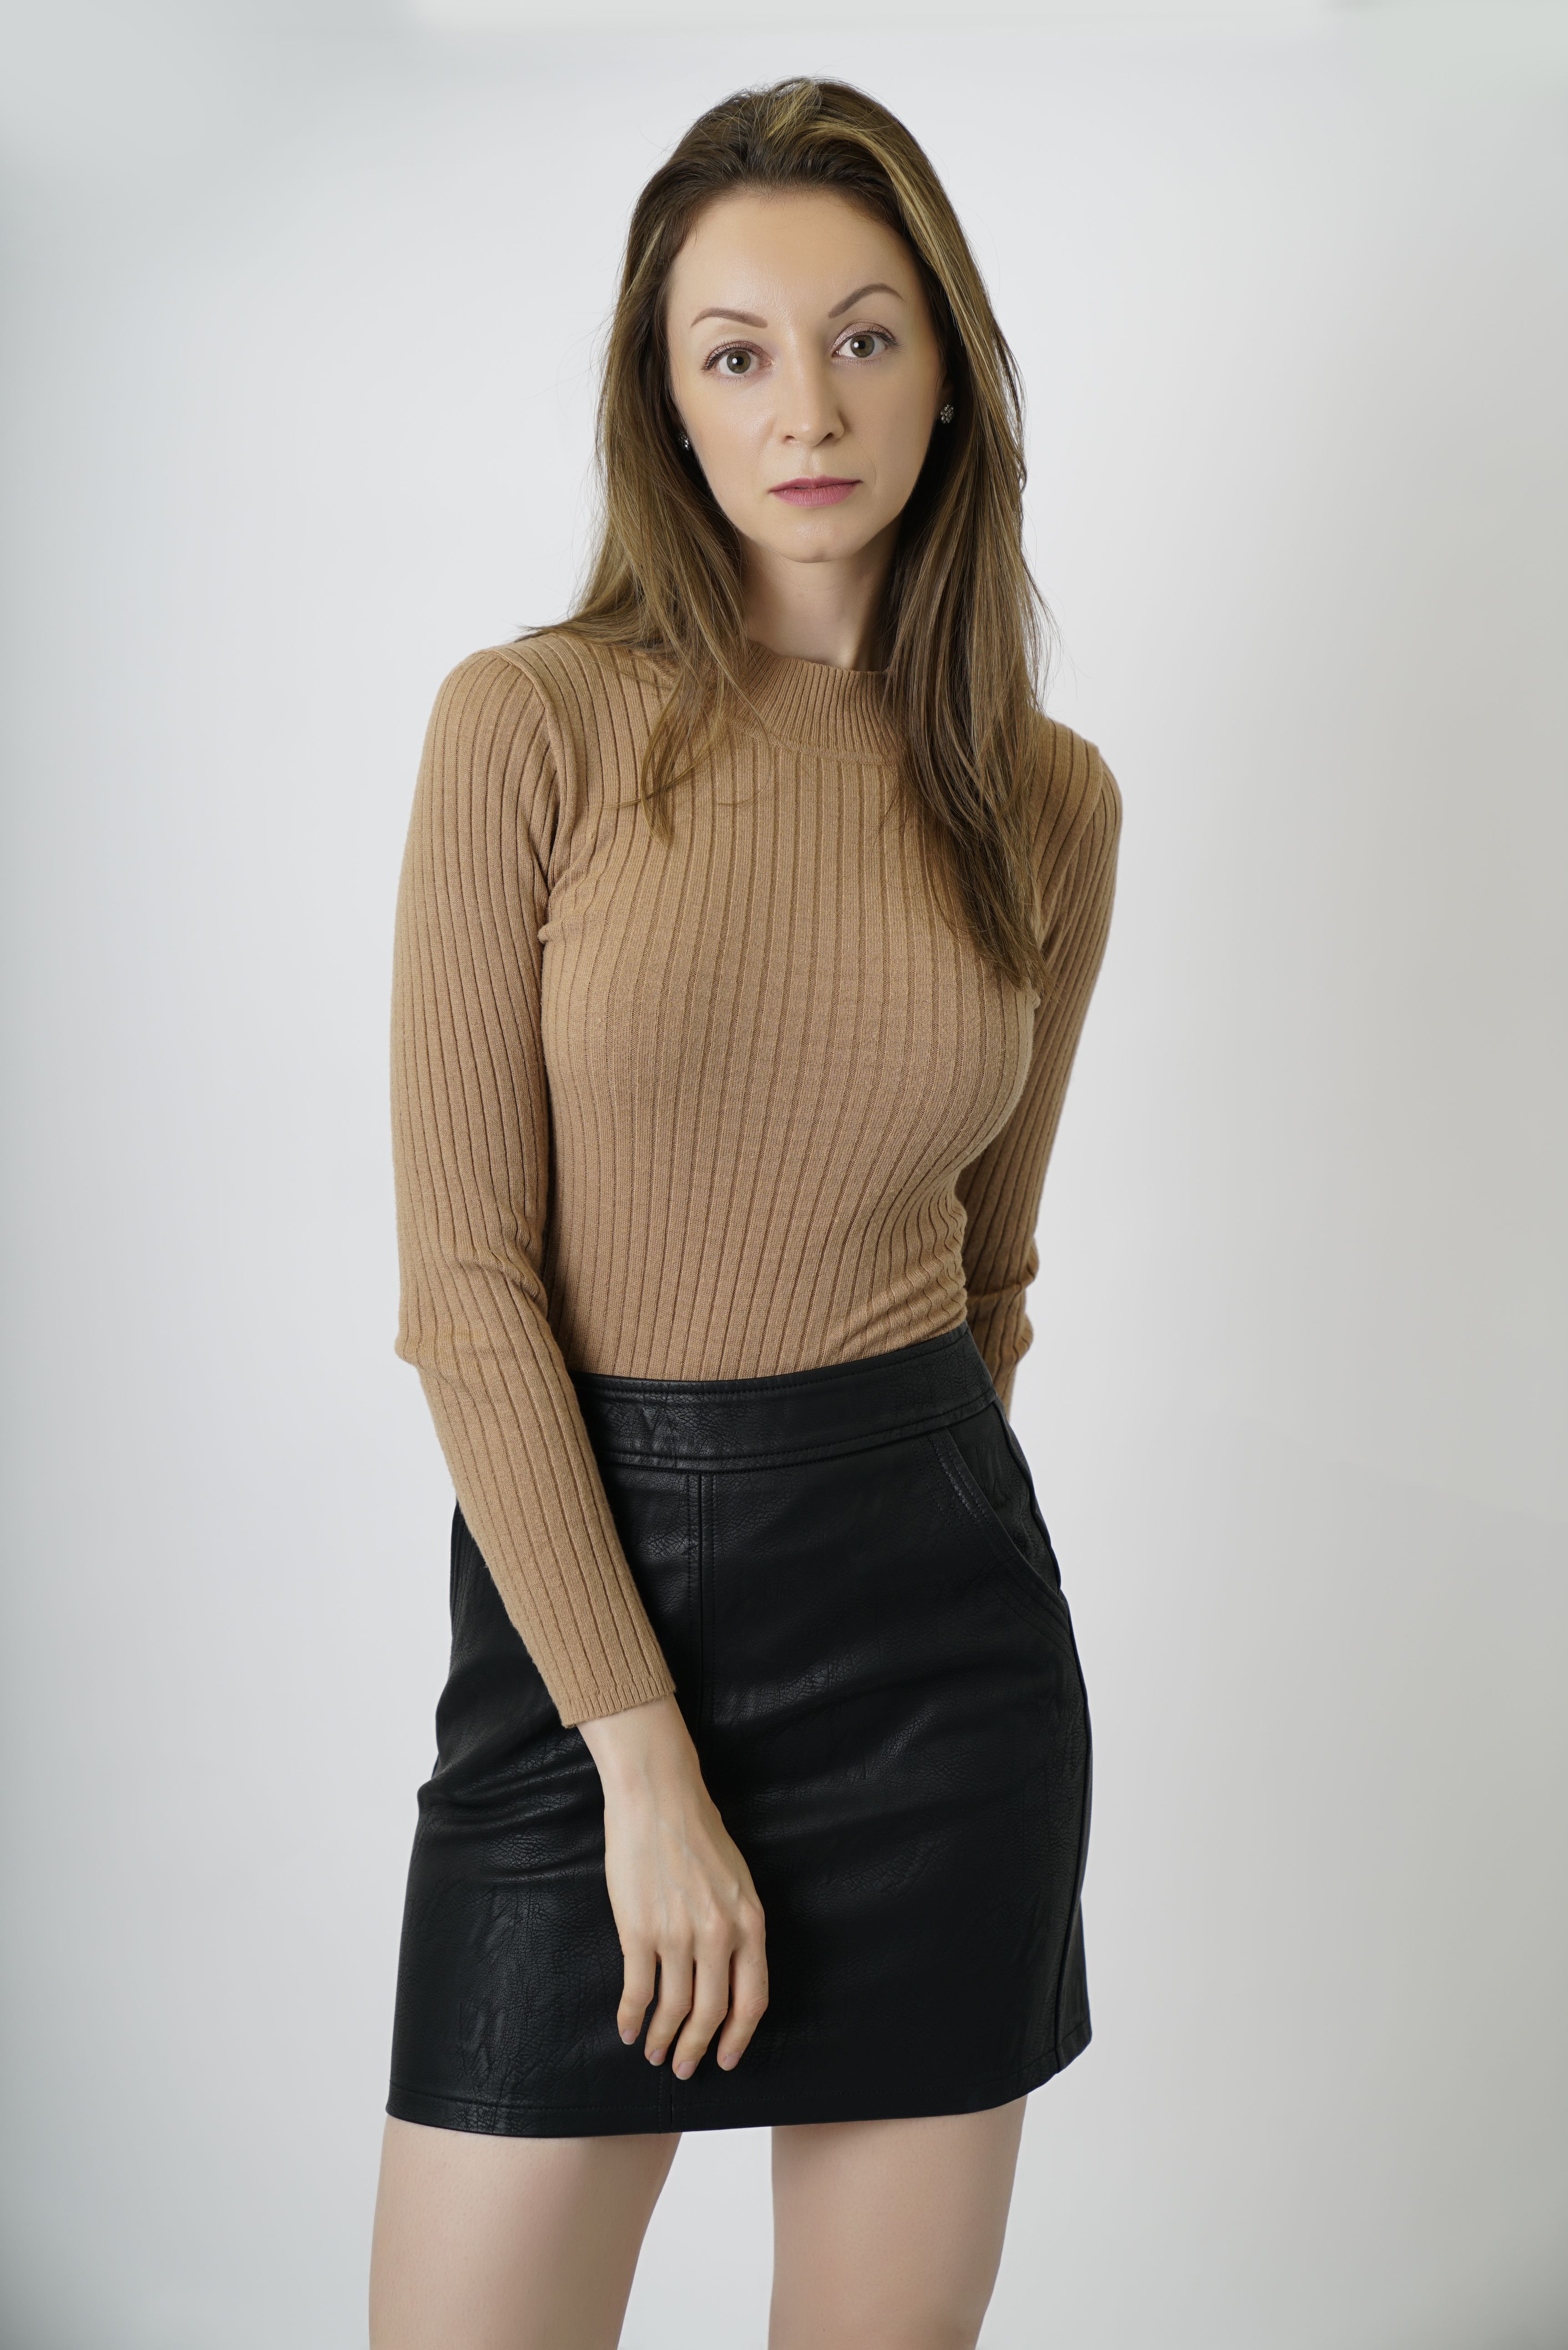 Amanda J Hunt Profile | YUMM - Your Model Management